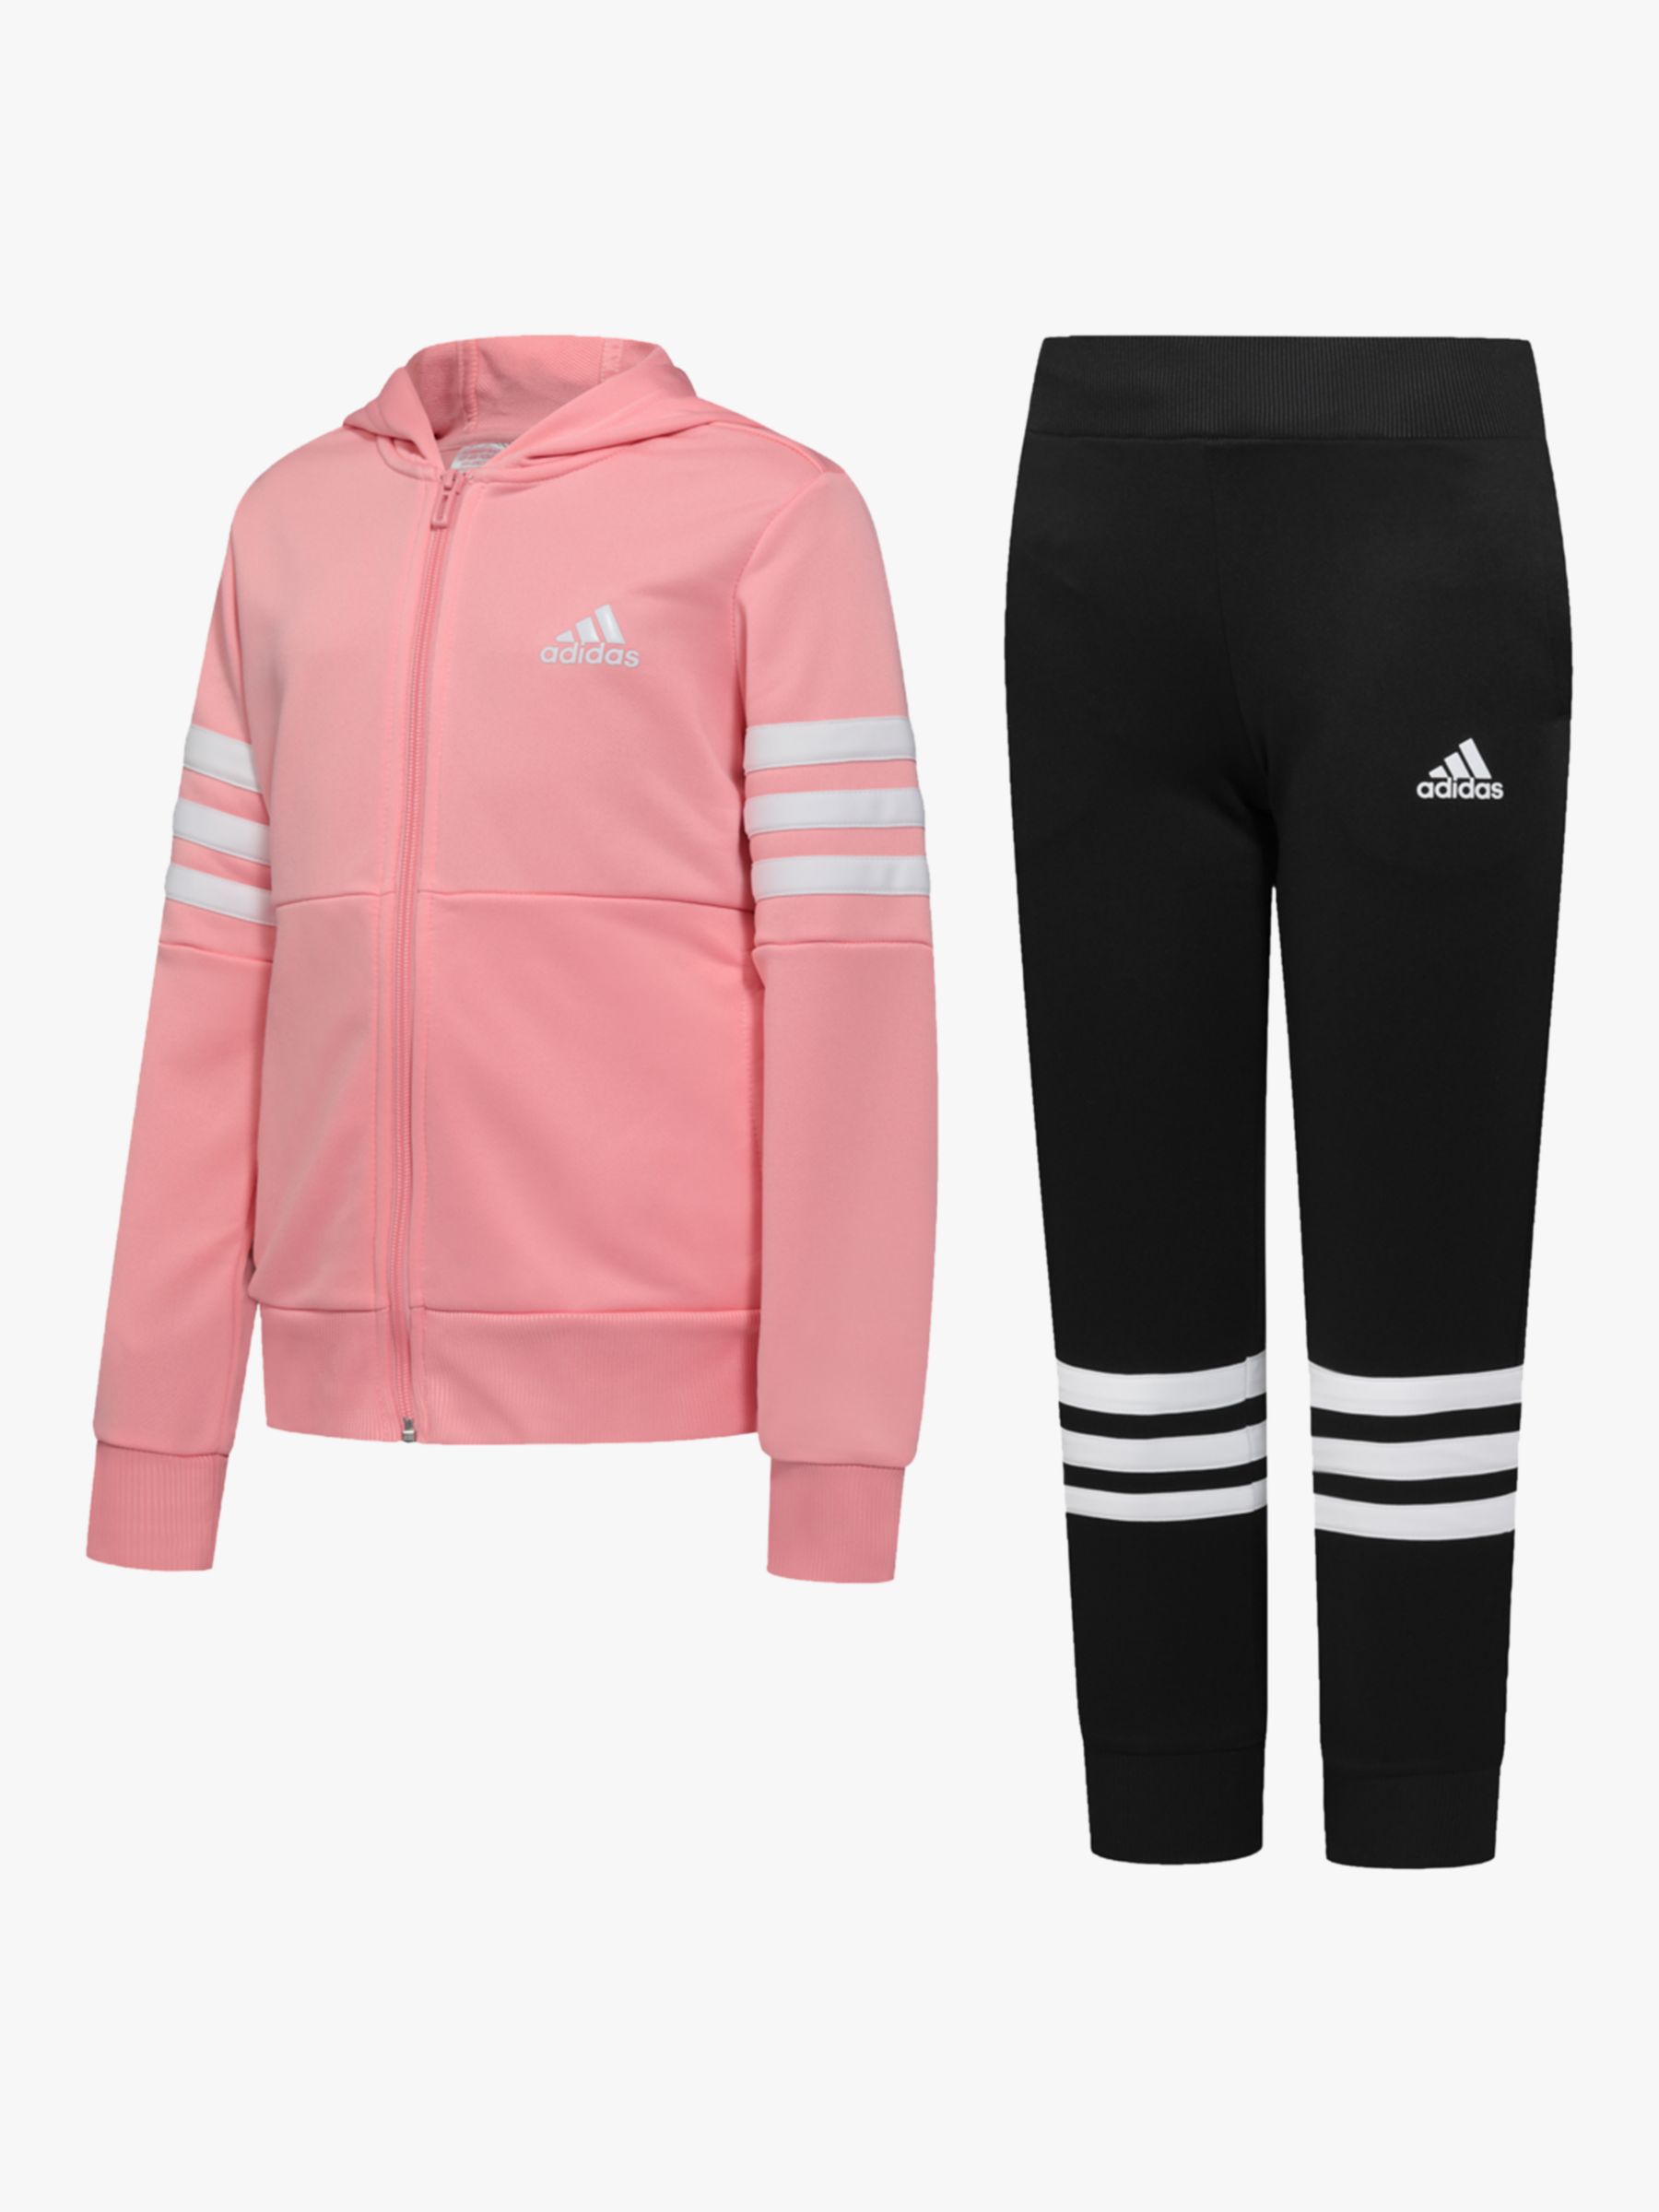 ladies black and pink adidas tracksuit